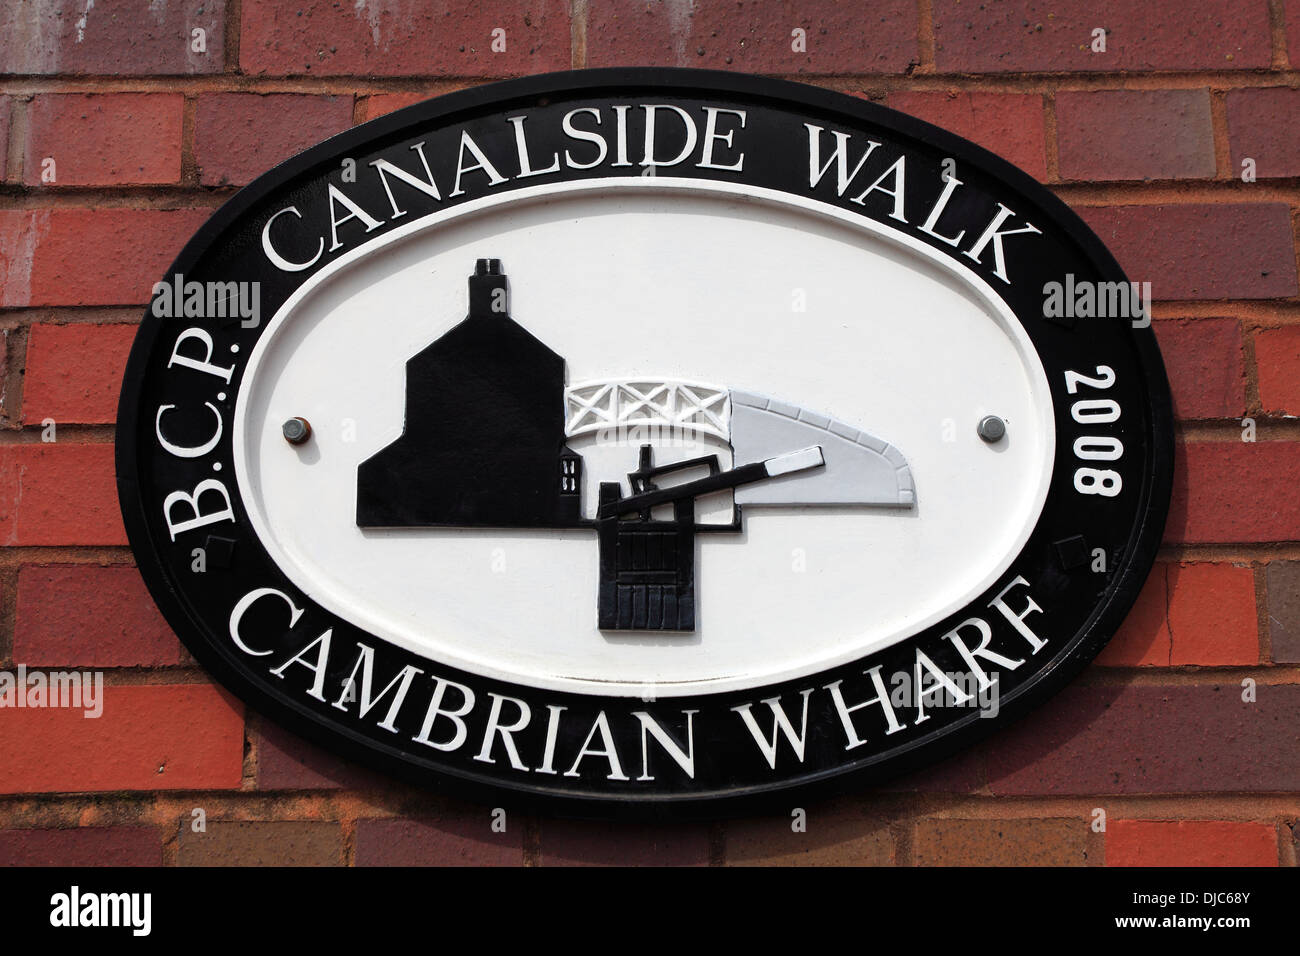 Cambrian Wharf Plaque, Worcester and Birmingham Canal, Birmingham City, West Midlands, England, UK Stock Photo